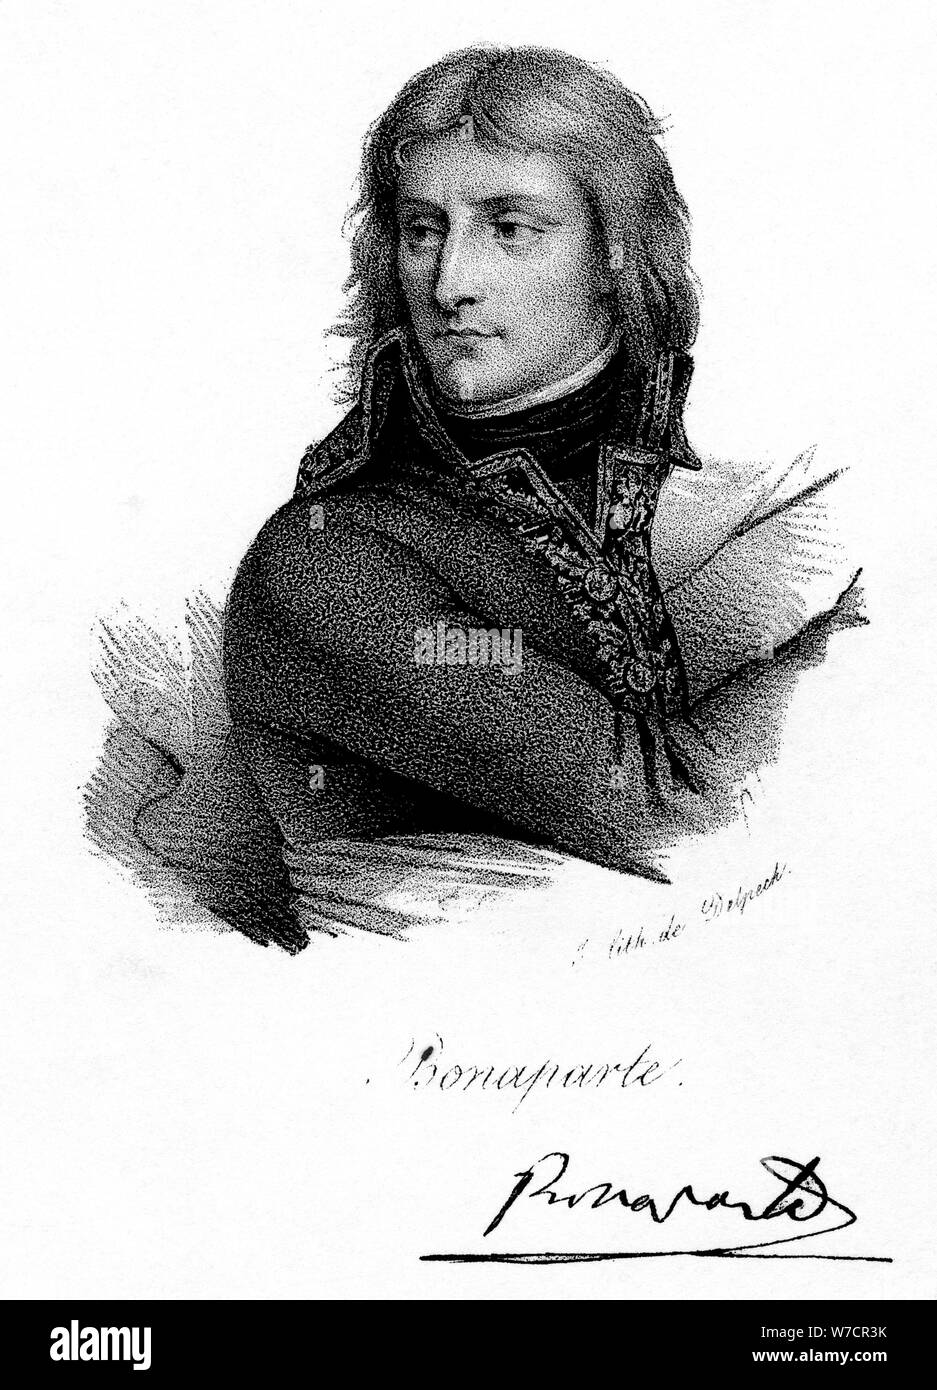 Napoleon Bonaparte as a young man, c 1790s, (c1830).  Artist: Delpech Stock Photo